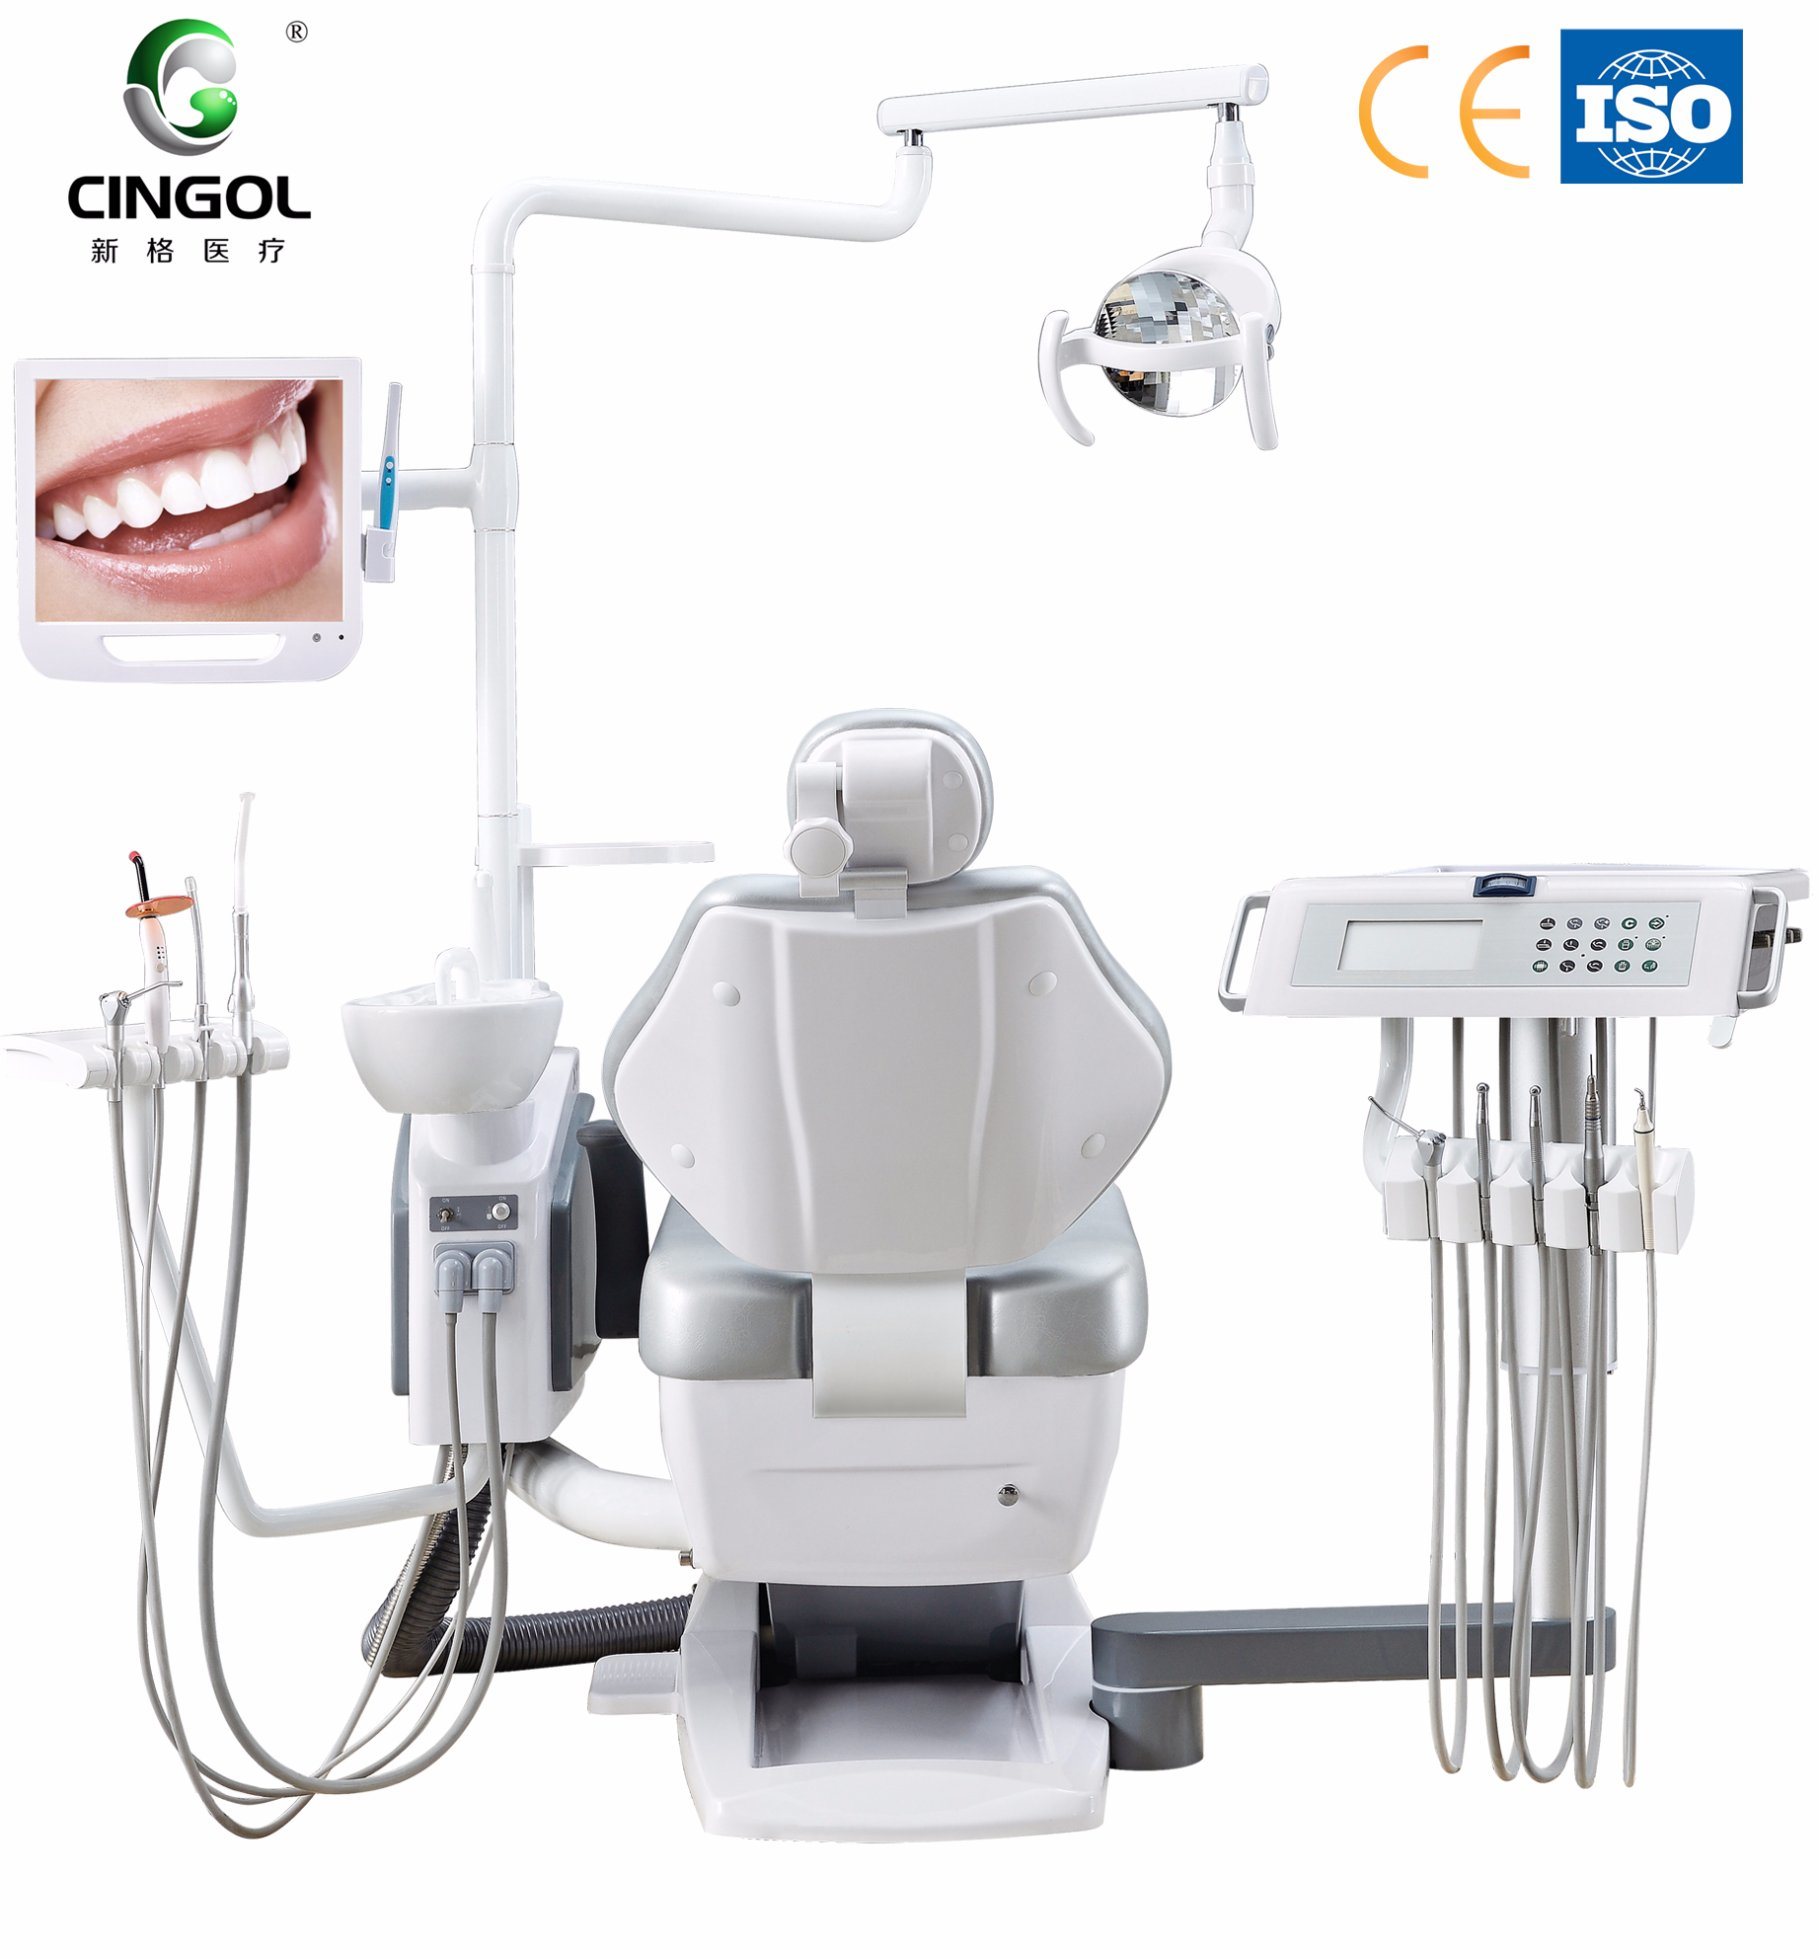 X1 Cingol Dental Chair for Hospital Center